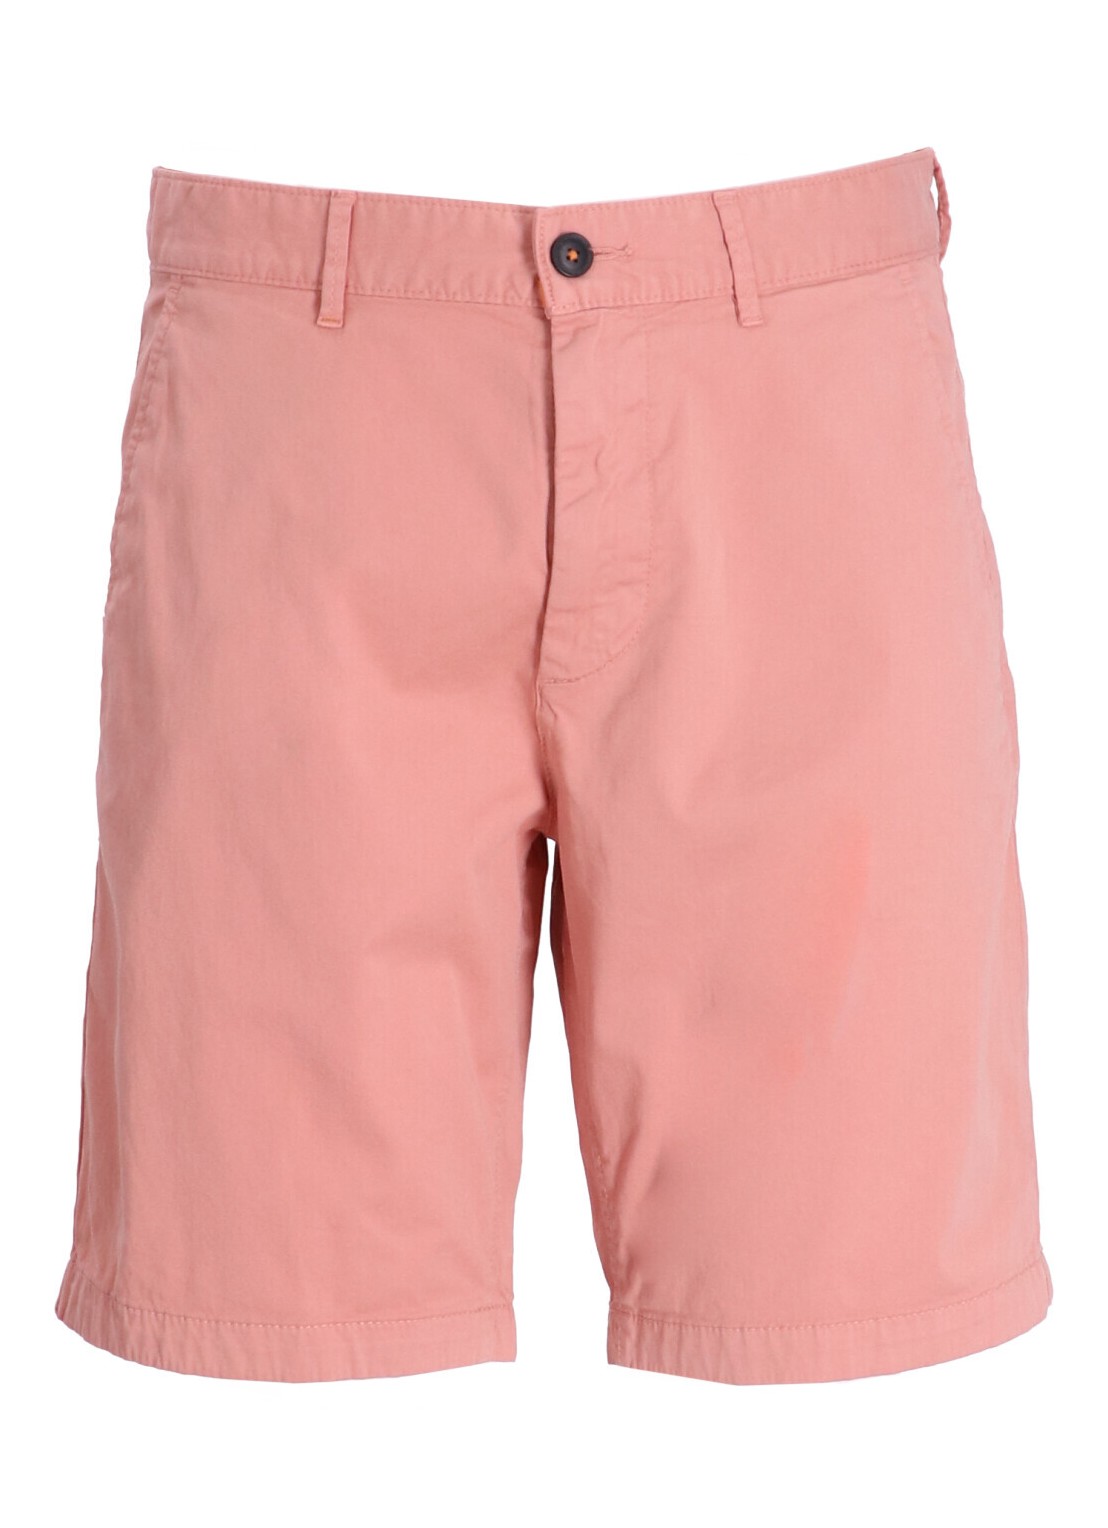 Pantalon corto boss short pant manchino-slim-shorts - 50513026 695 talla 34
 